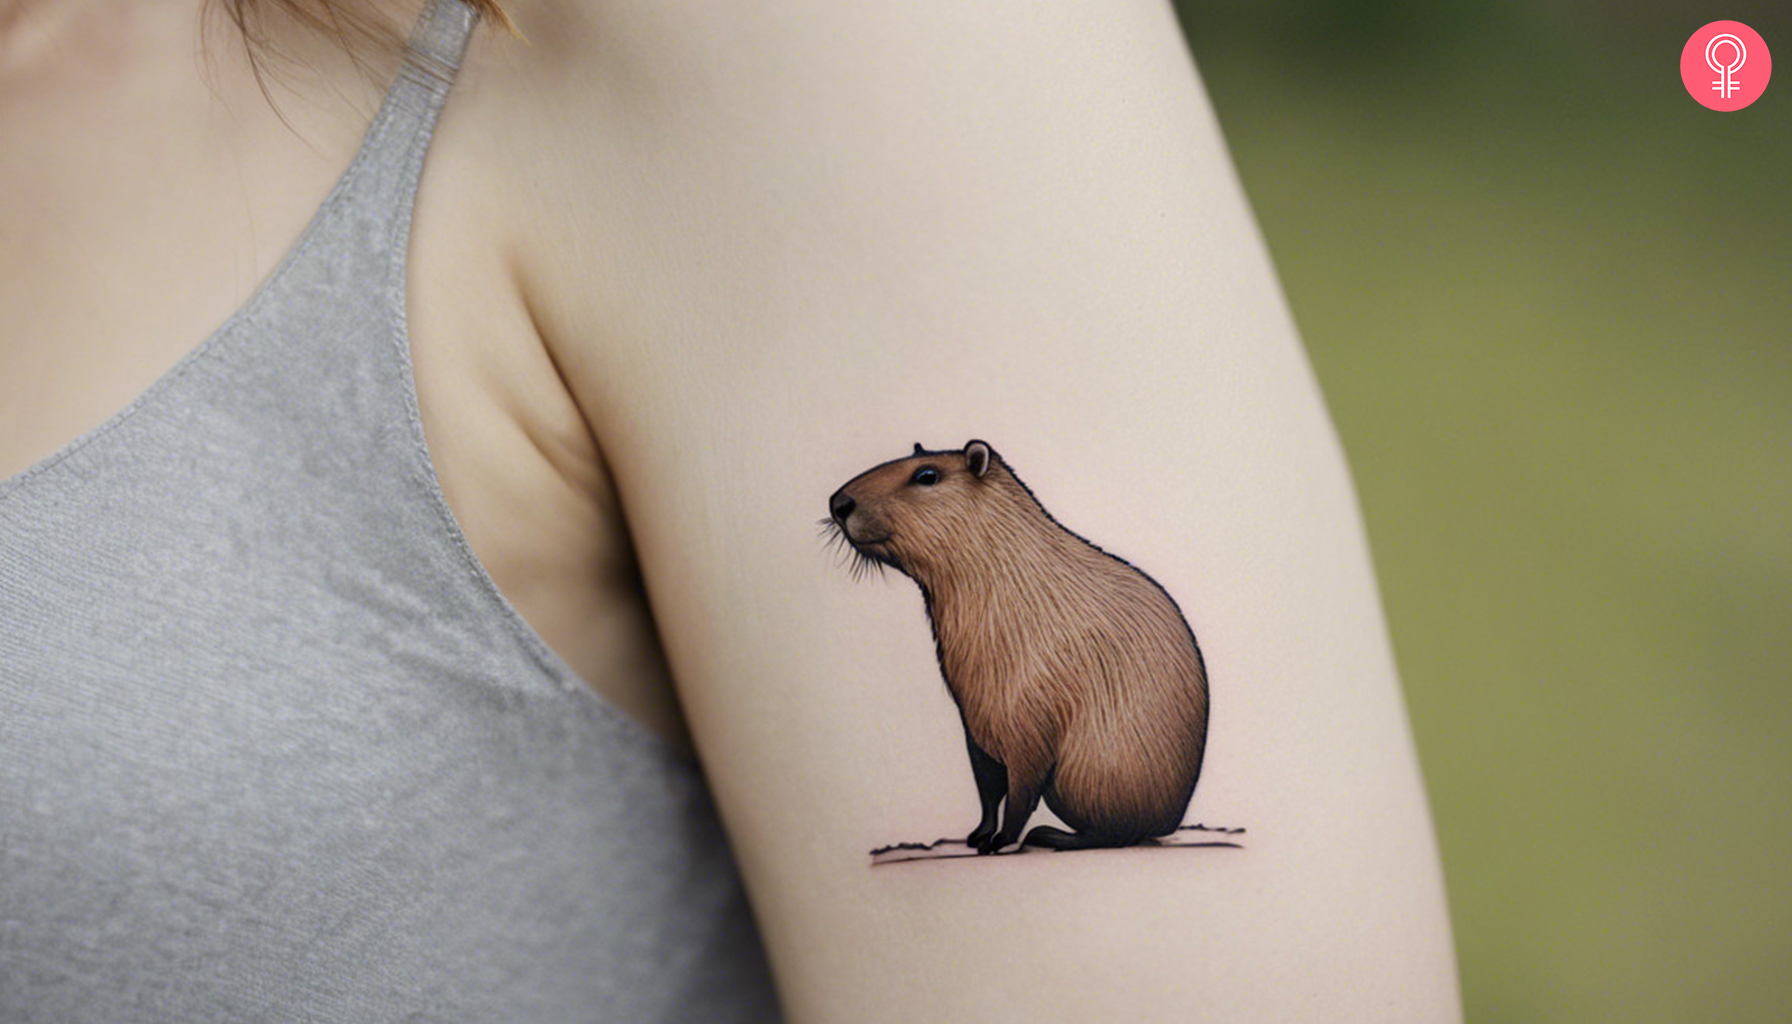 Simple capybara tattoo on a woman’s upper arm